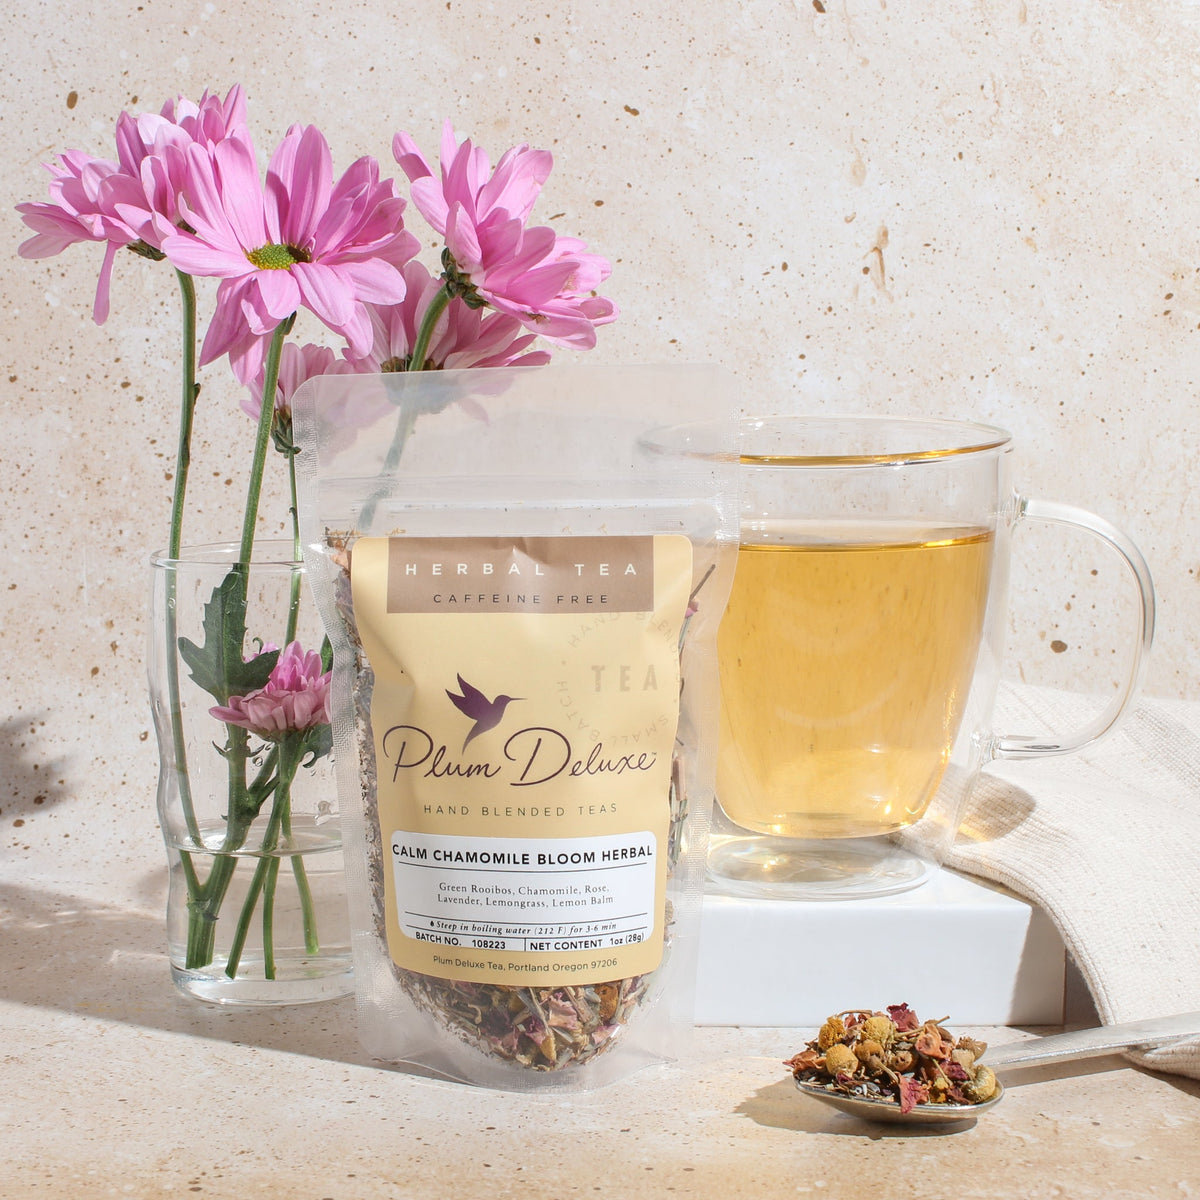 Calm Chamomile Bloom Herbal Tea (Rose - Lavender) by Plum Deluxe Tea